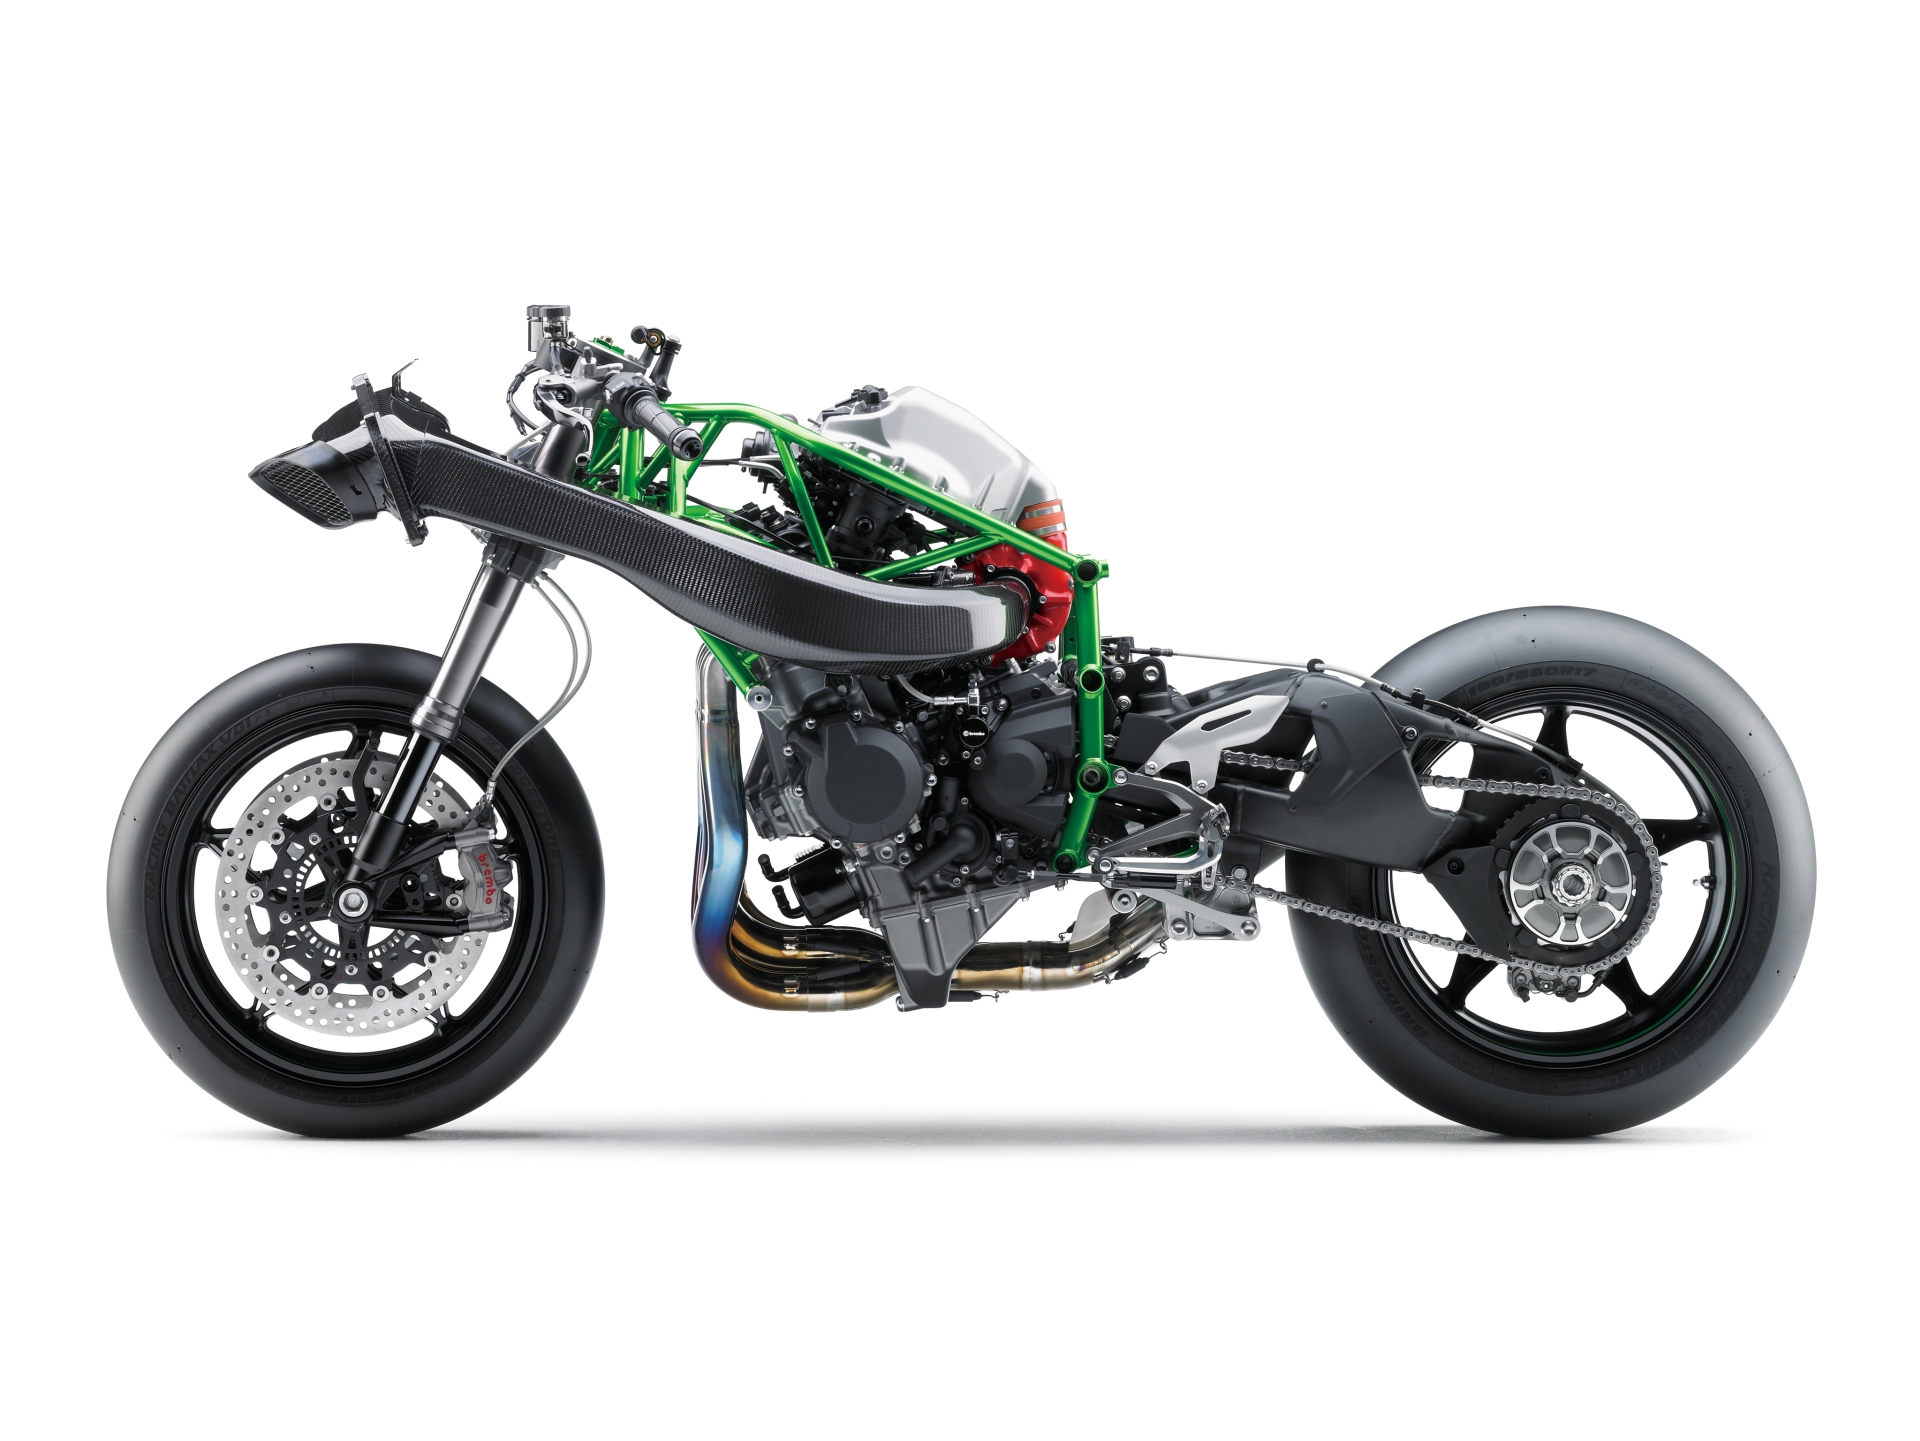 Strålende Tanke fumle Kawasaki Ninja H2 and H2R Prices Confirmed - autoevolution